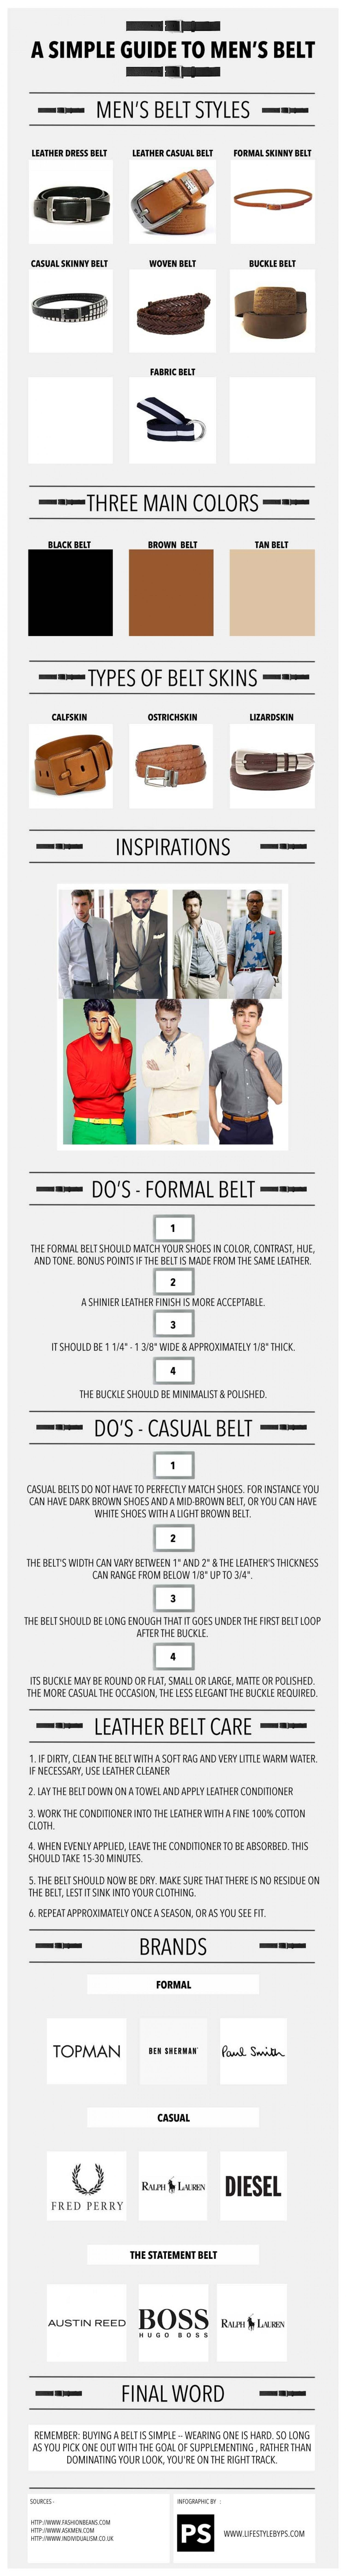 Guide to Men's Belts